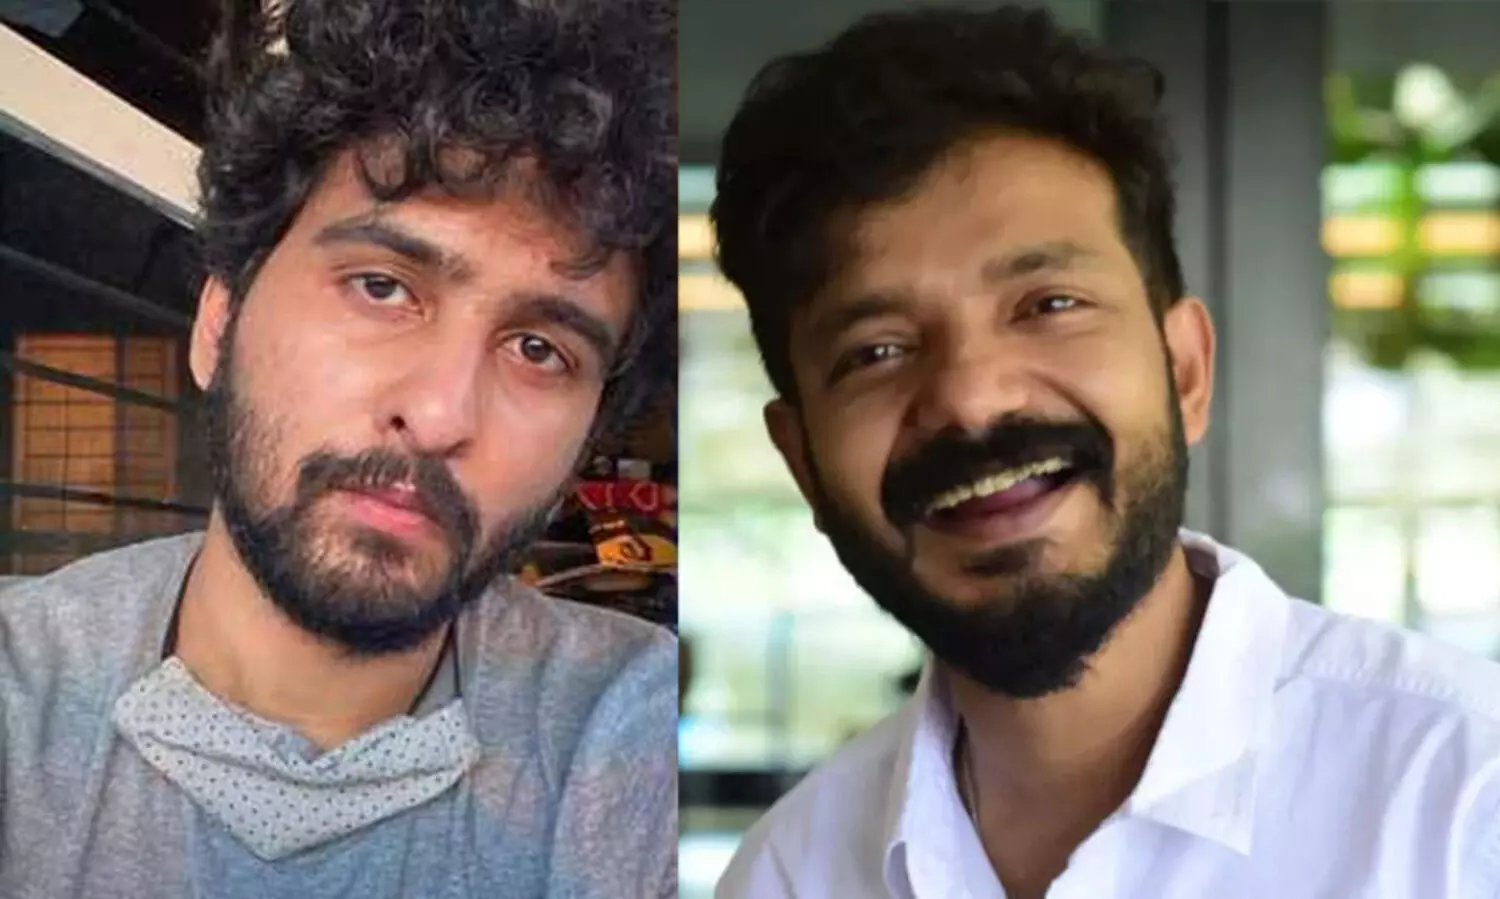 Action against actors: Kerala culture minister backs film bodies